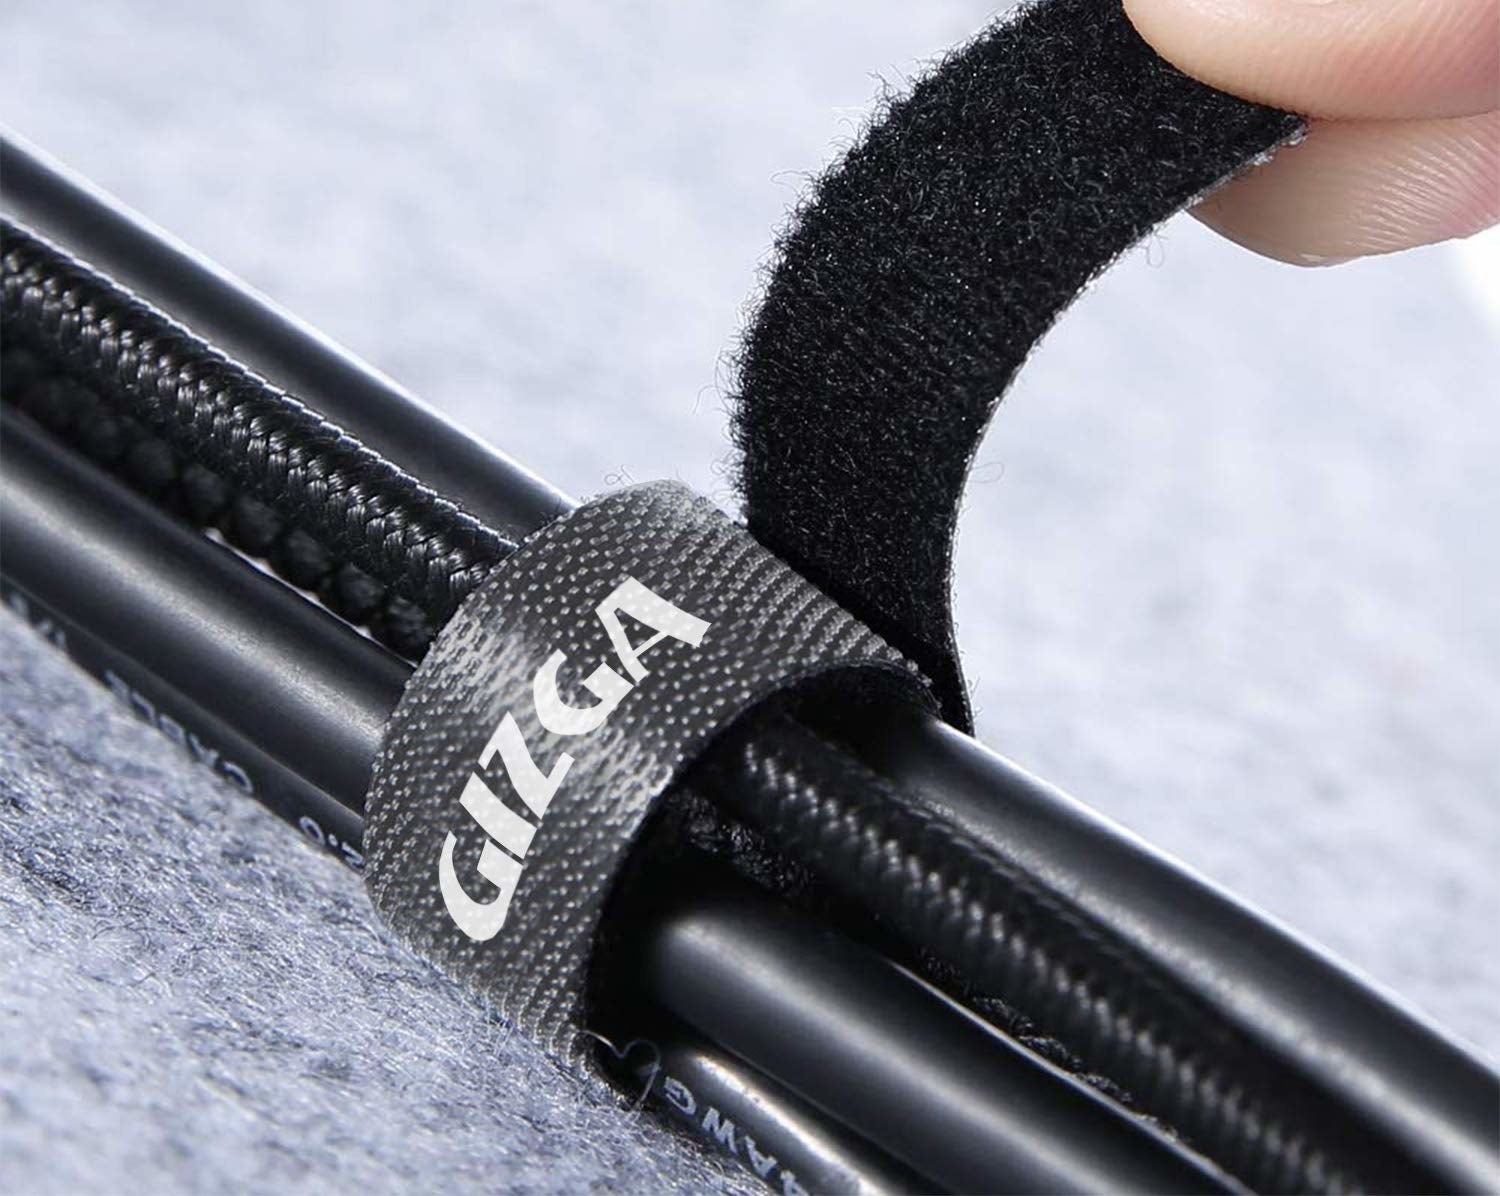 Black velcro cable ties